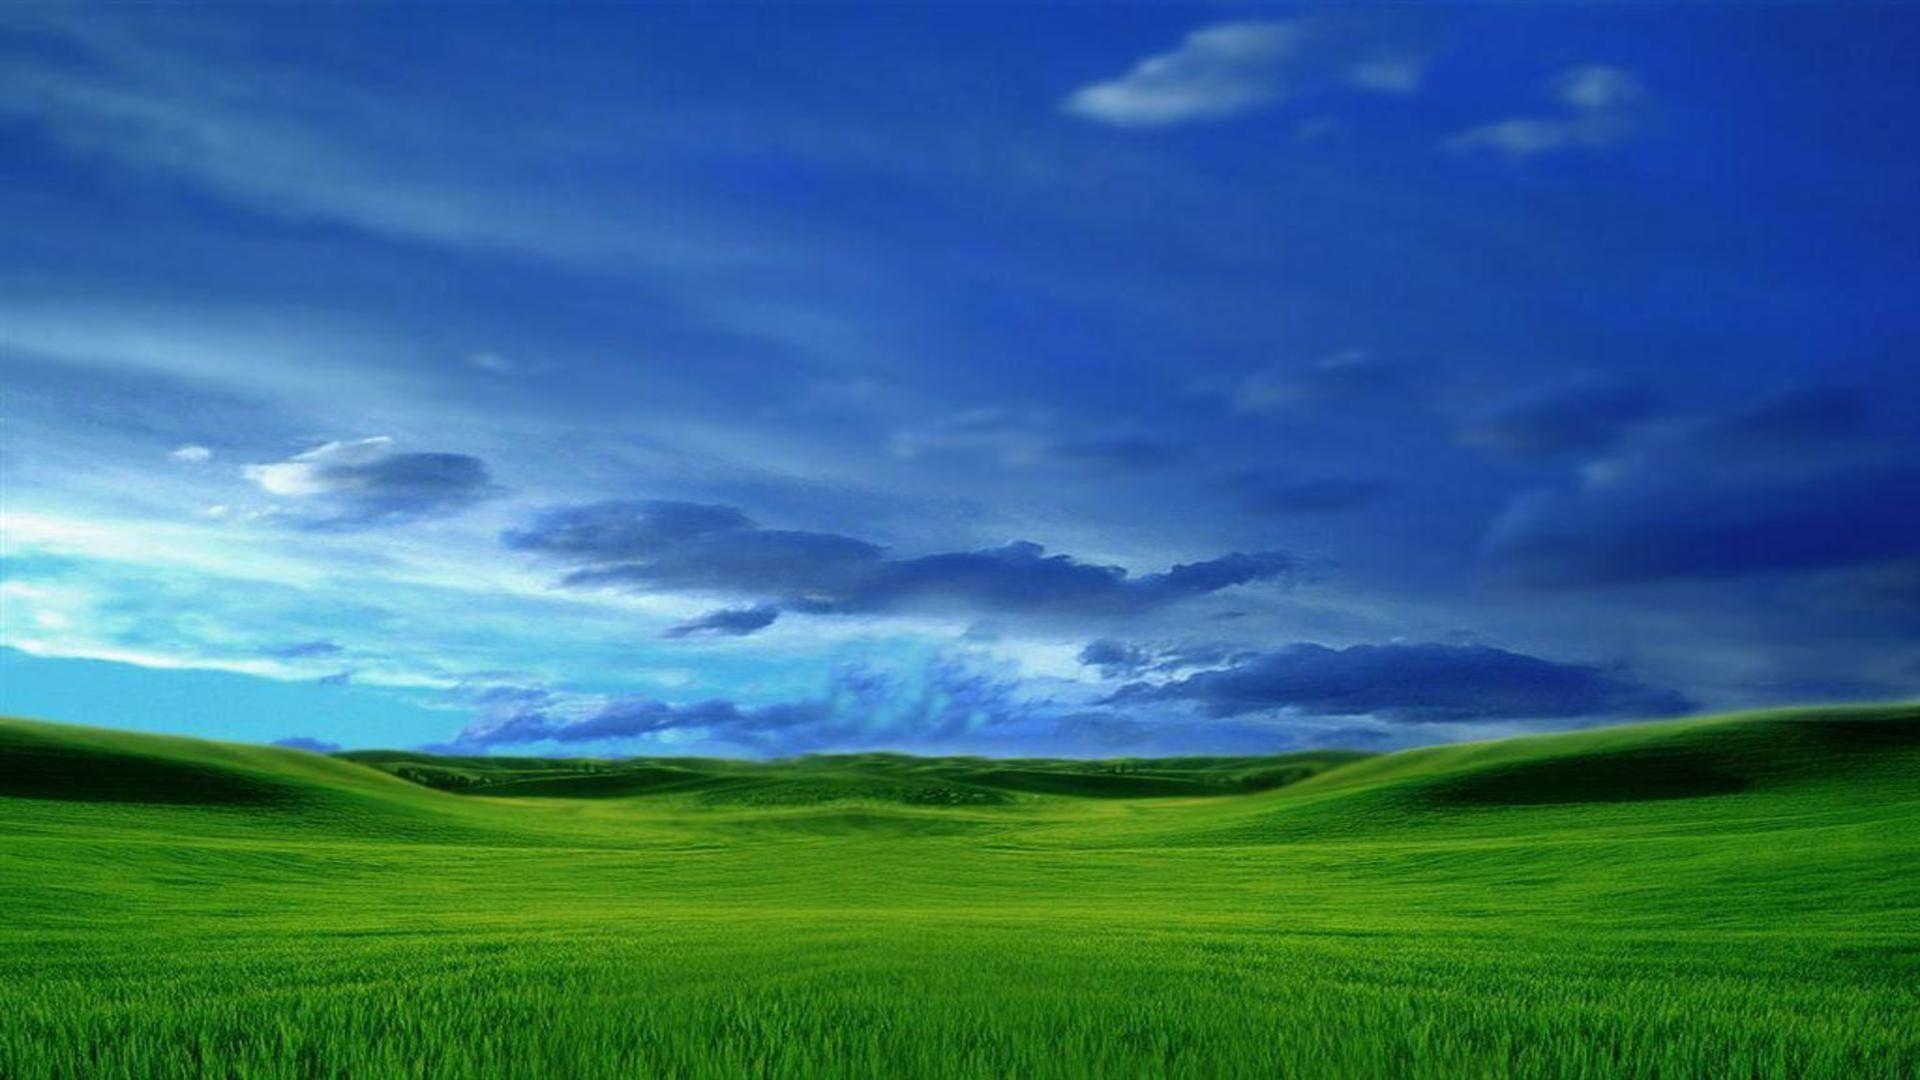 100+] Windows Vista Wallpapers